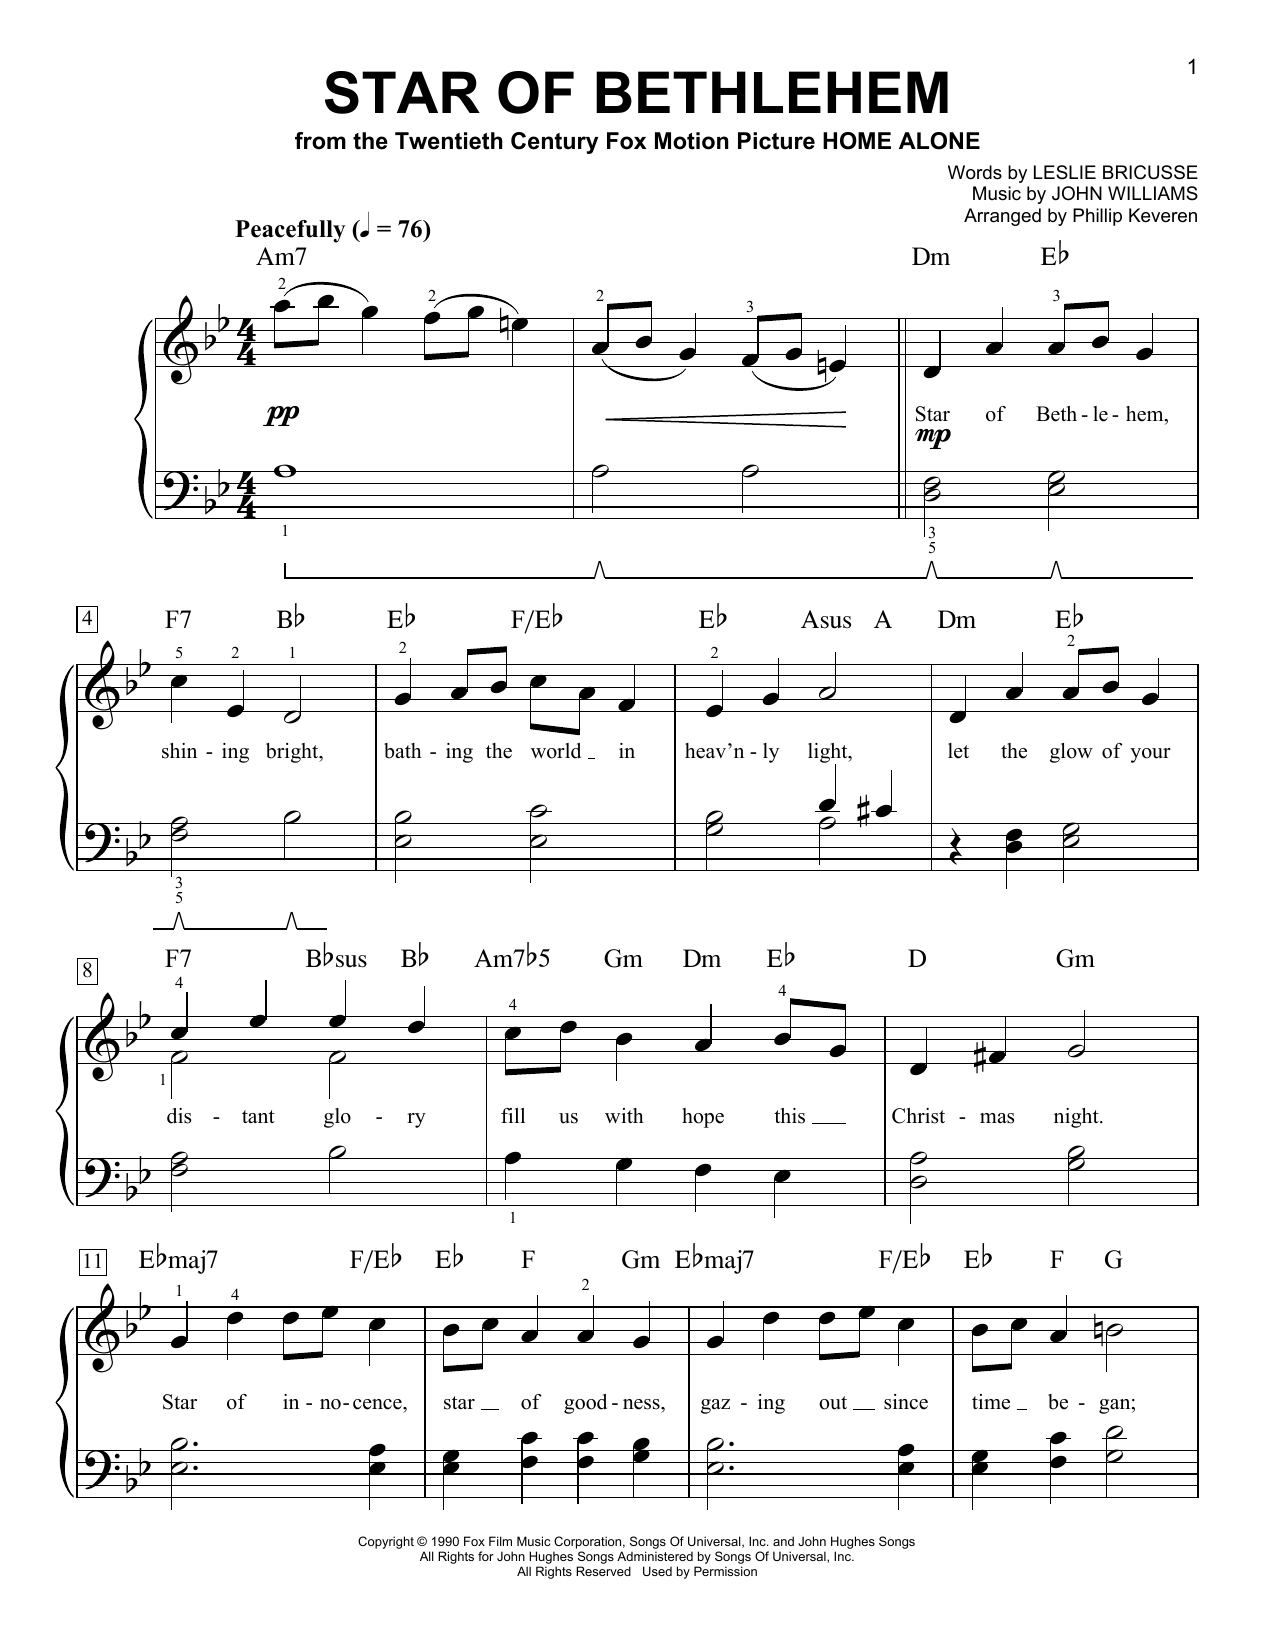 Leslie Bricusse Star Of Bethlehem (arr. Phillip Keveren) Sheet Music Notes & Chords for Easy Piano - Download or Print PDF